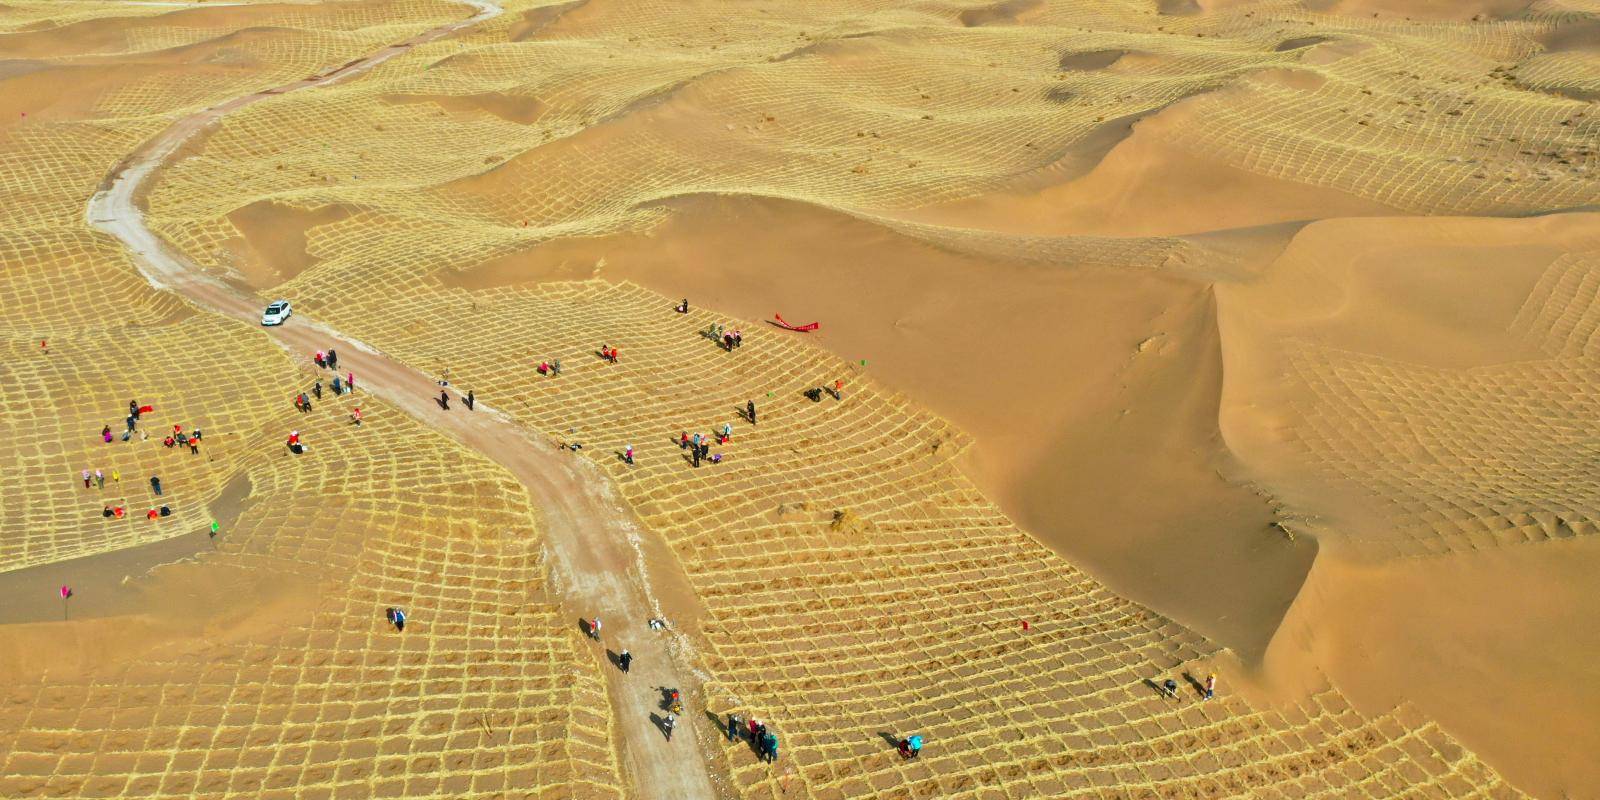 Aerial view of people planting trees against yellow sand dunes in China's Baidan Jaran desert